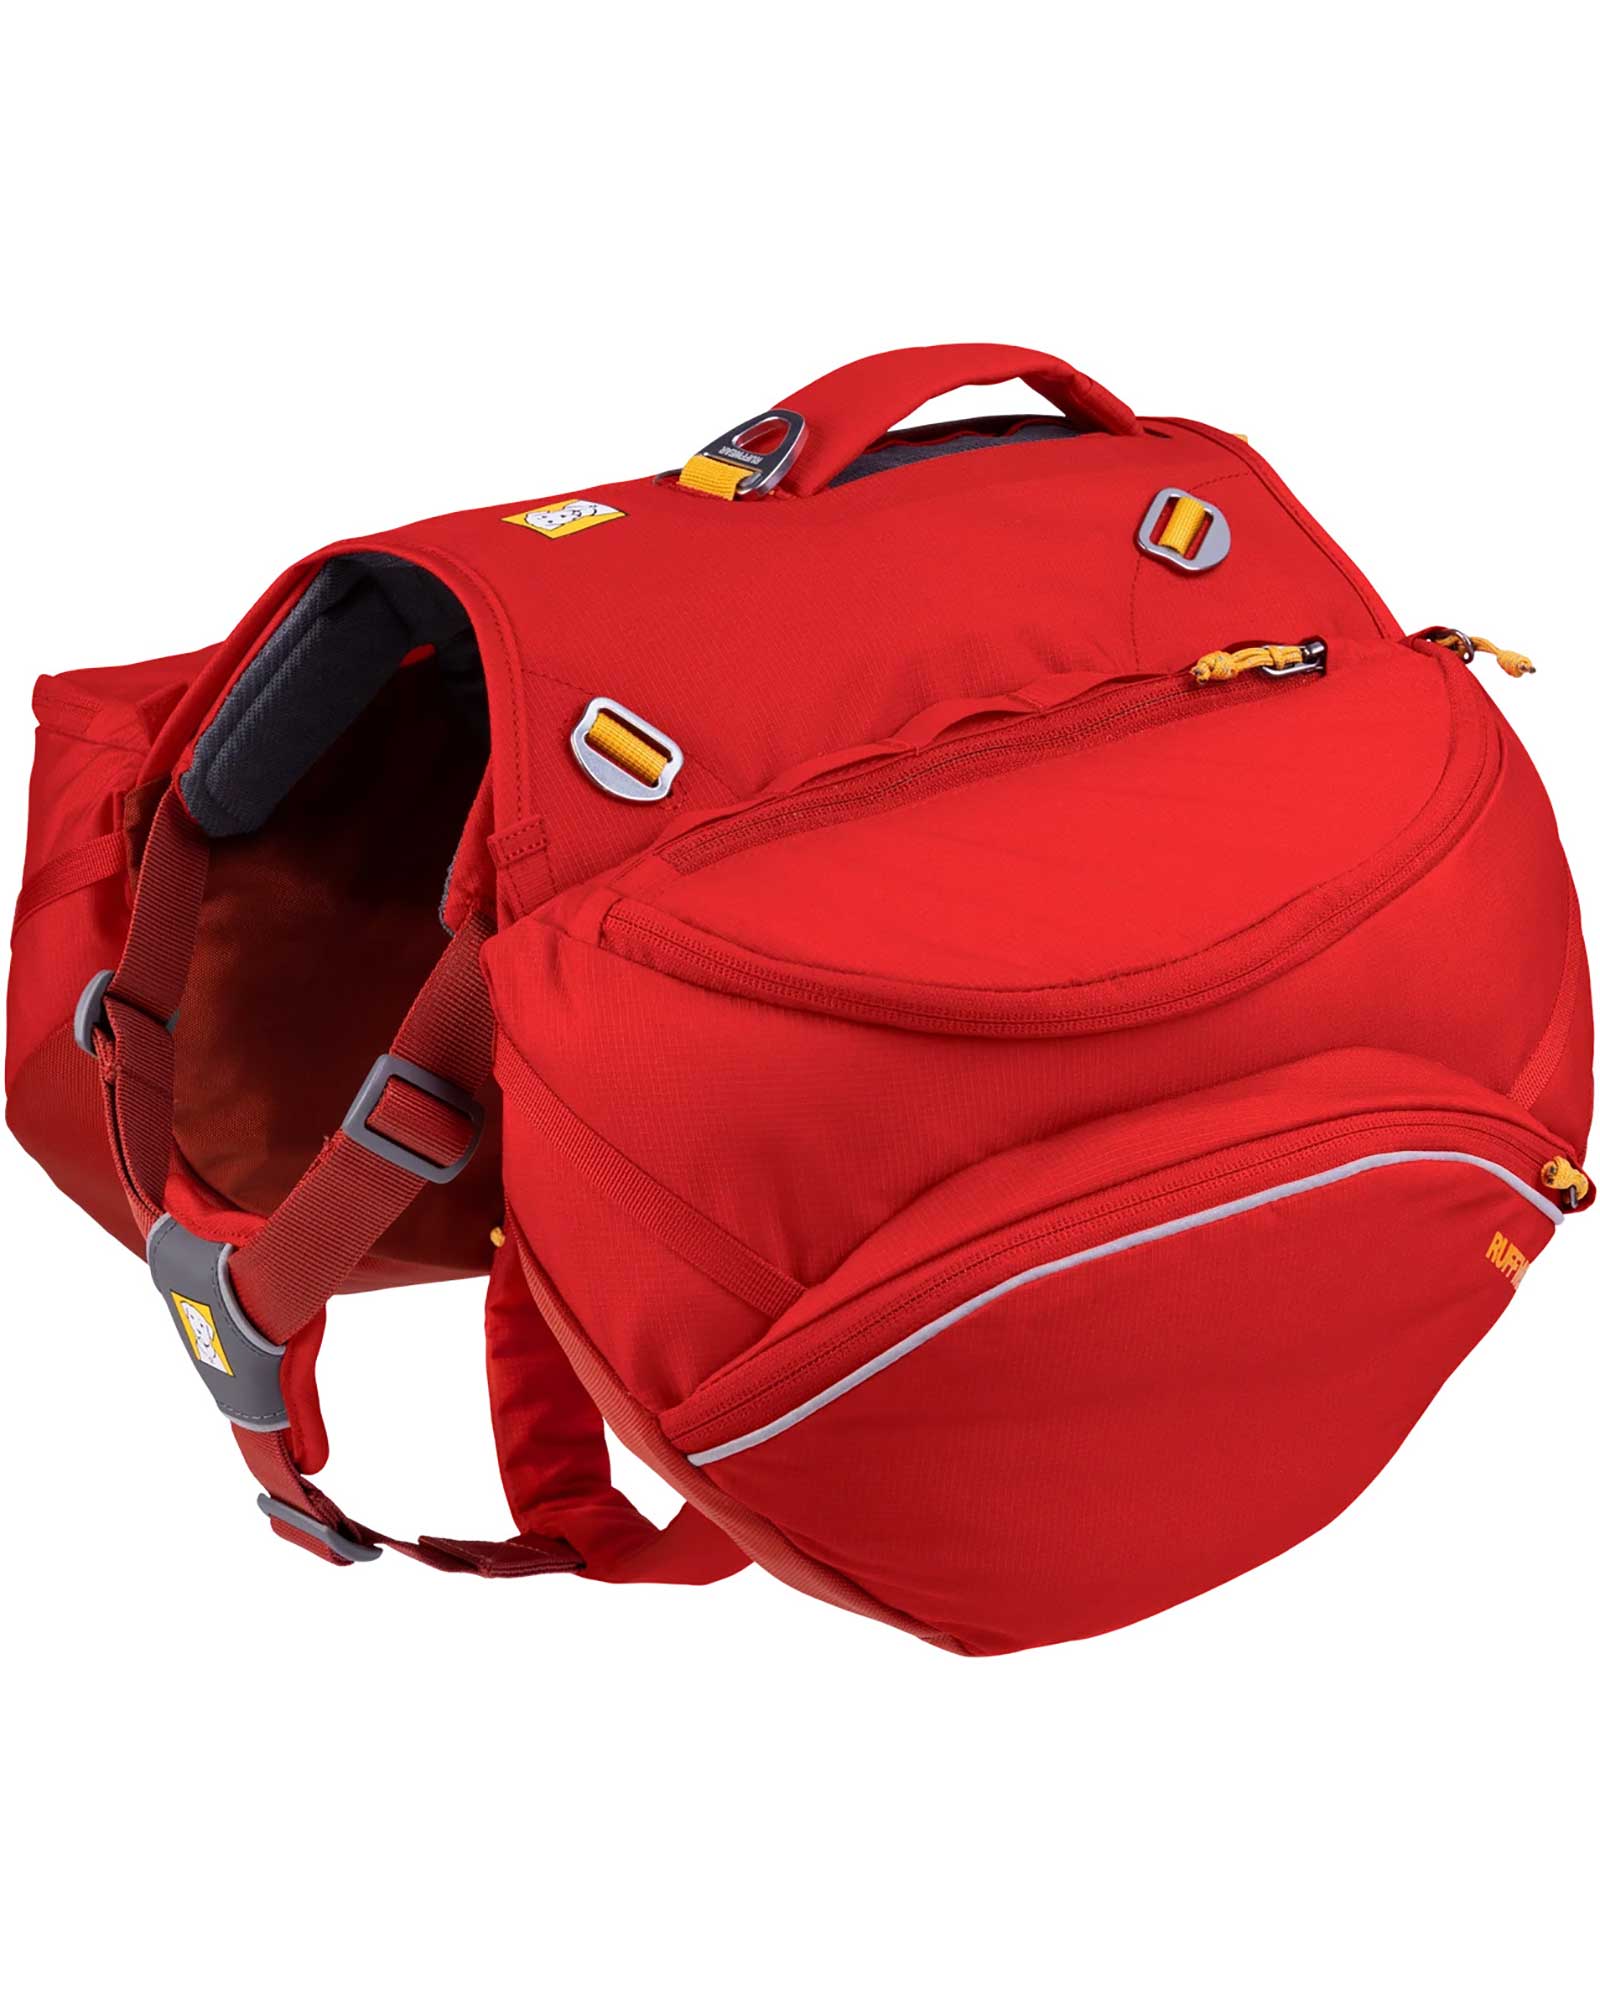 Ruffwear Palisades Pack - Red Sumac L/XL